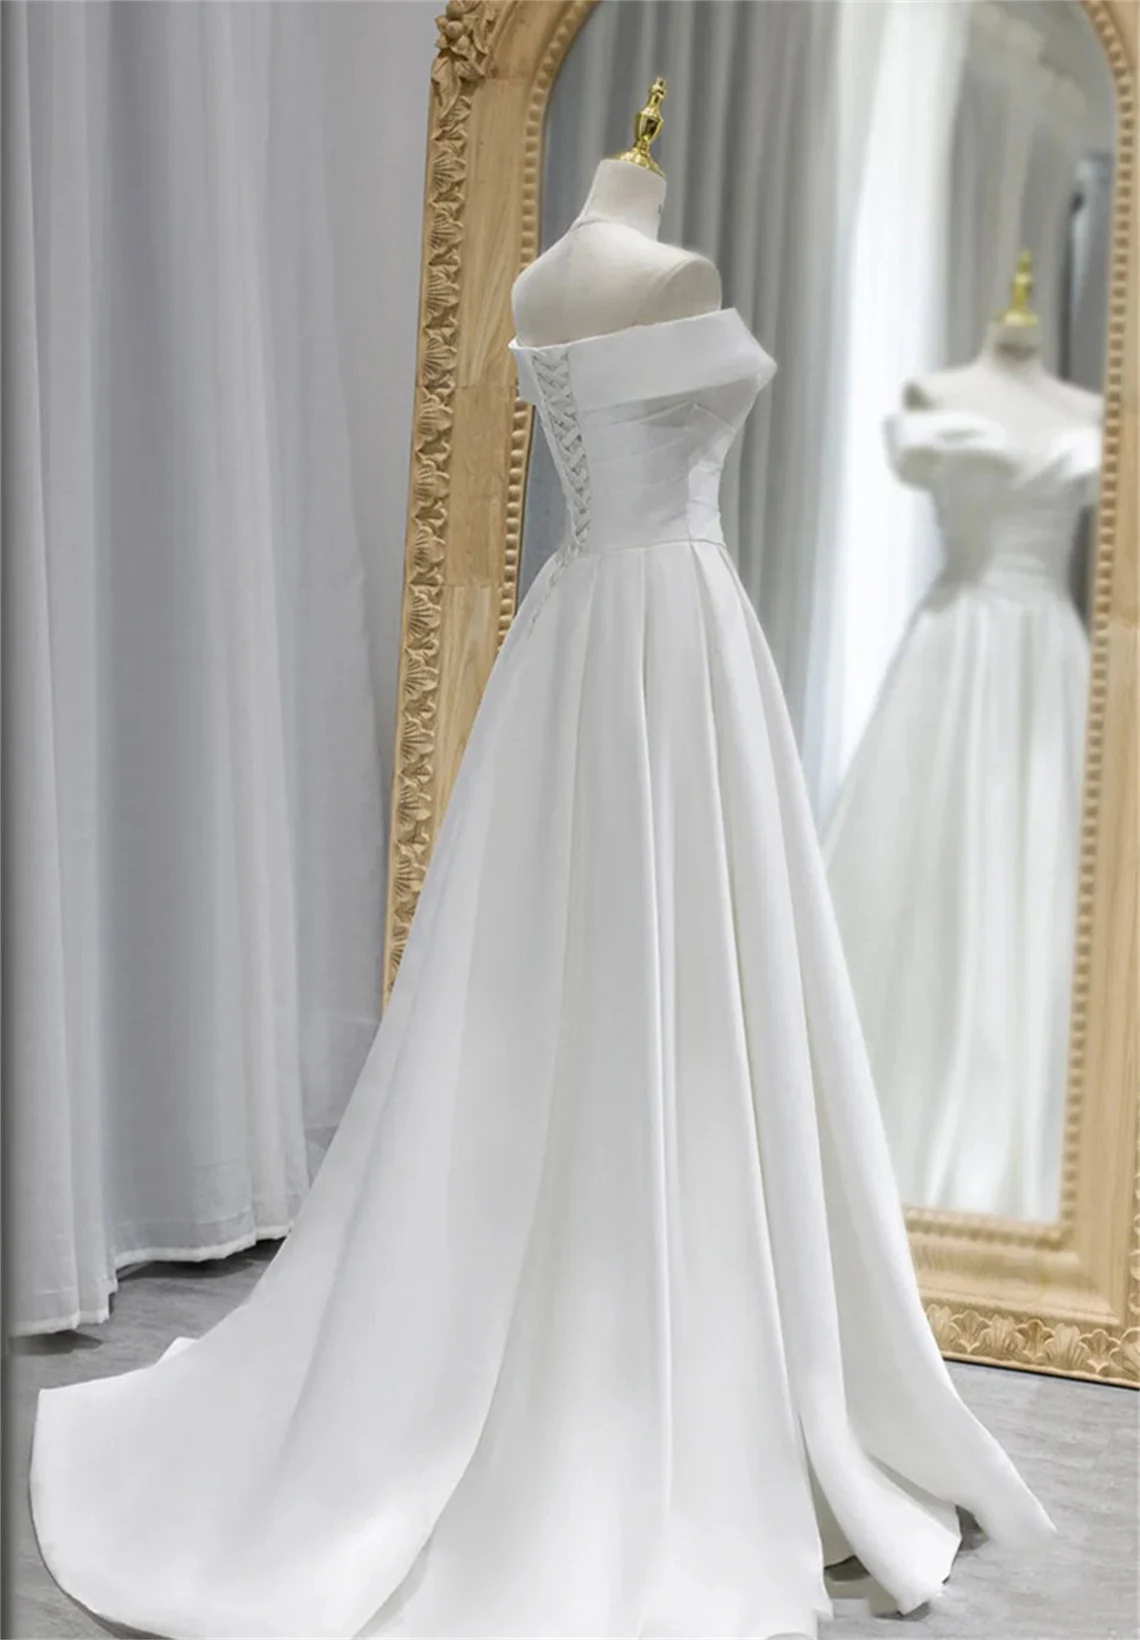 White Off Shoulder Satin Long Prom Dress, White Wedding Party Dresses